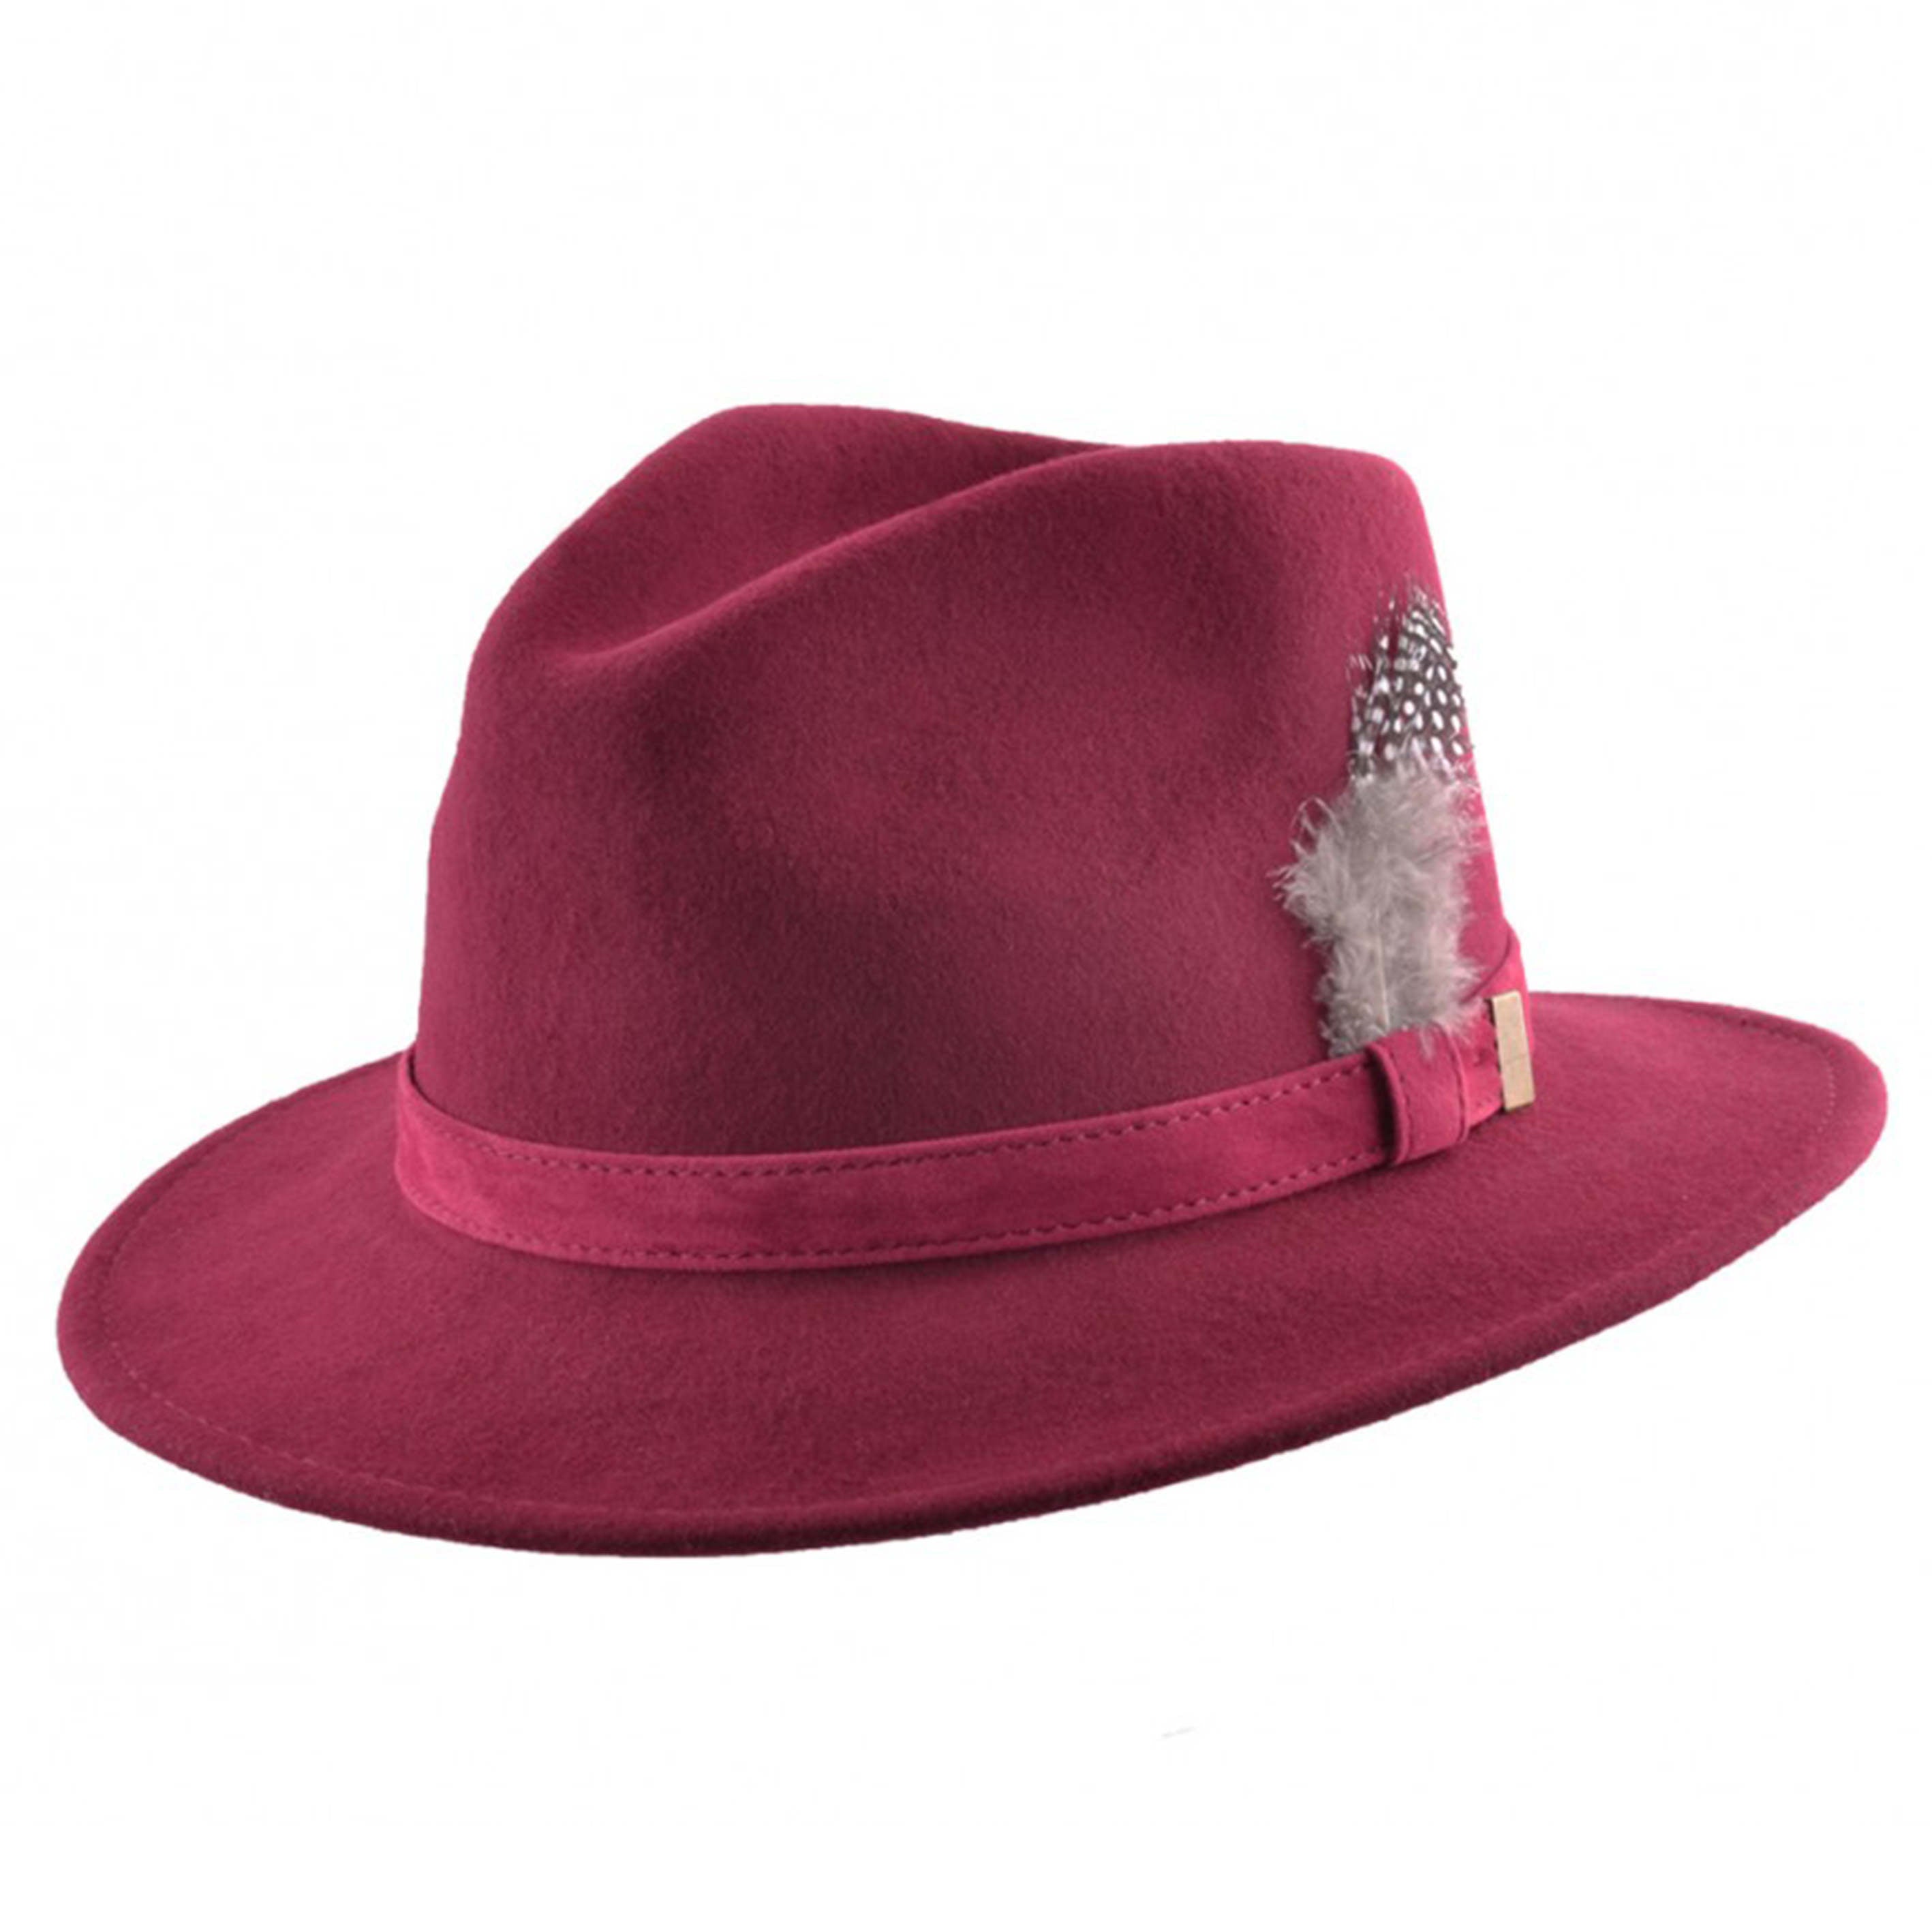 Trilby Fedora 100% Wool Maroon Hat